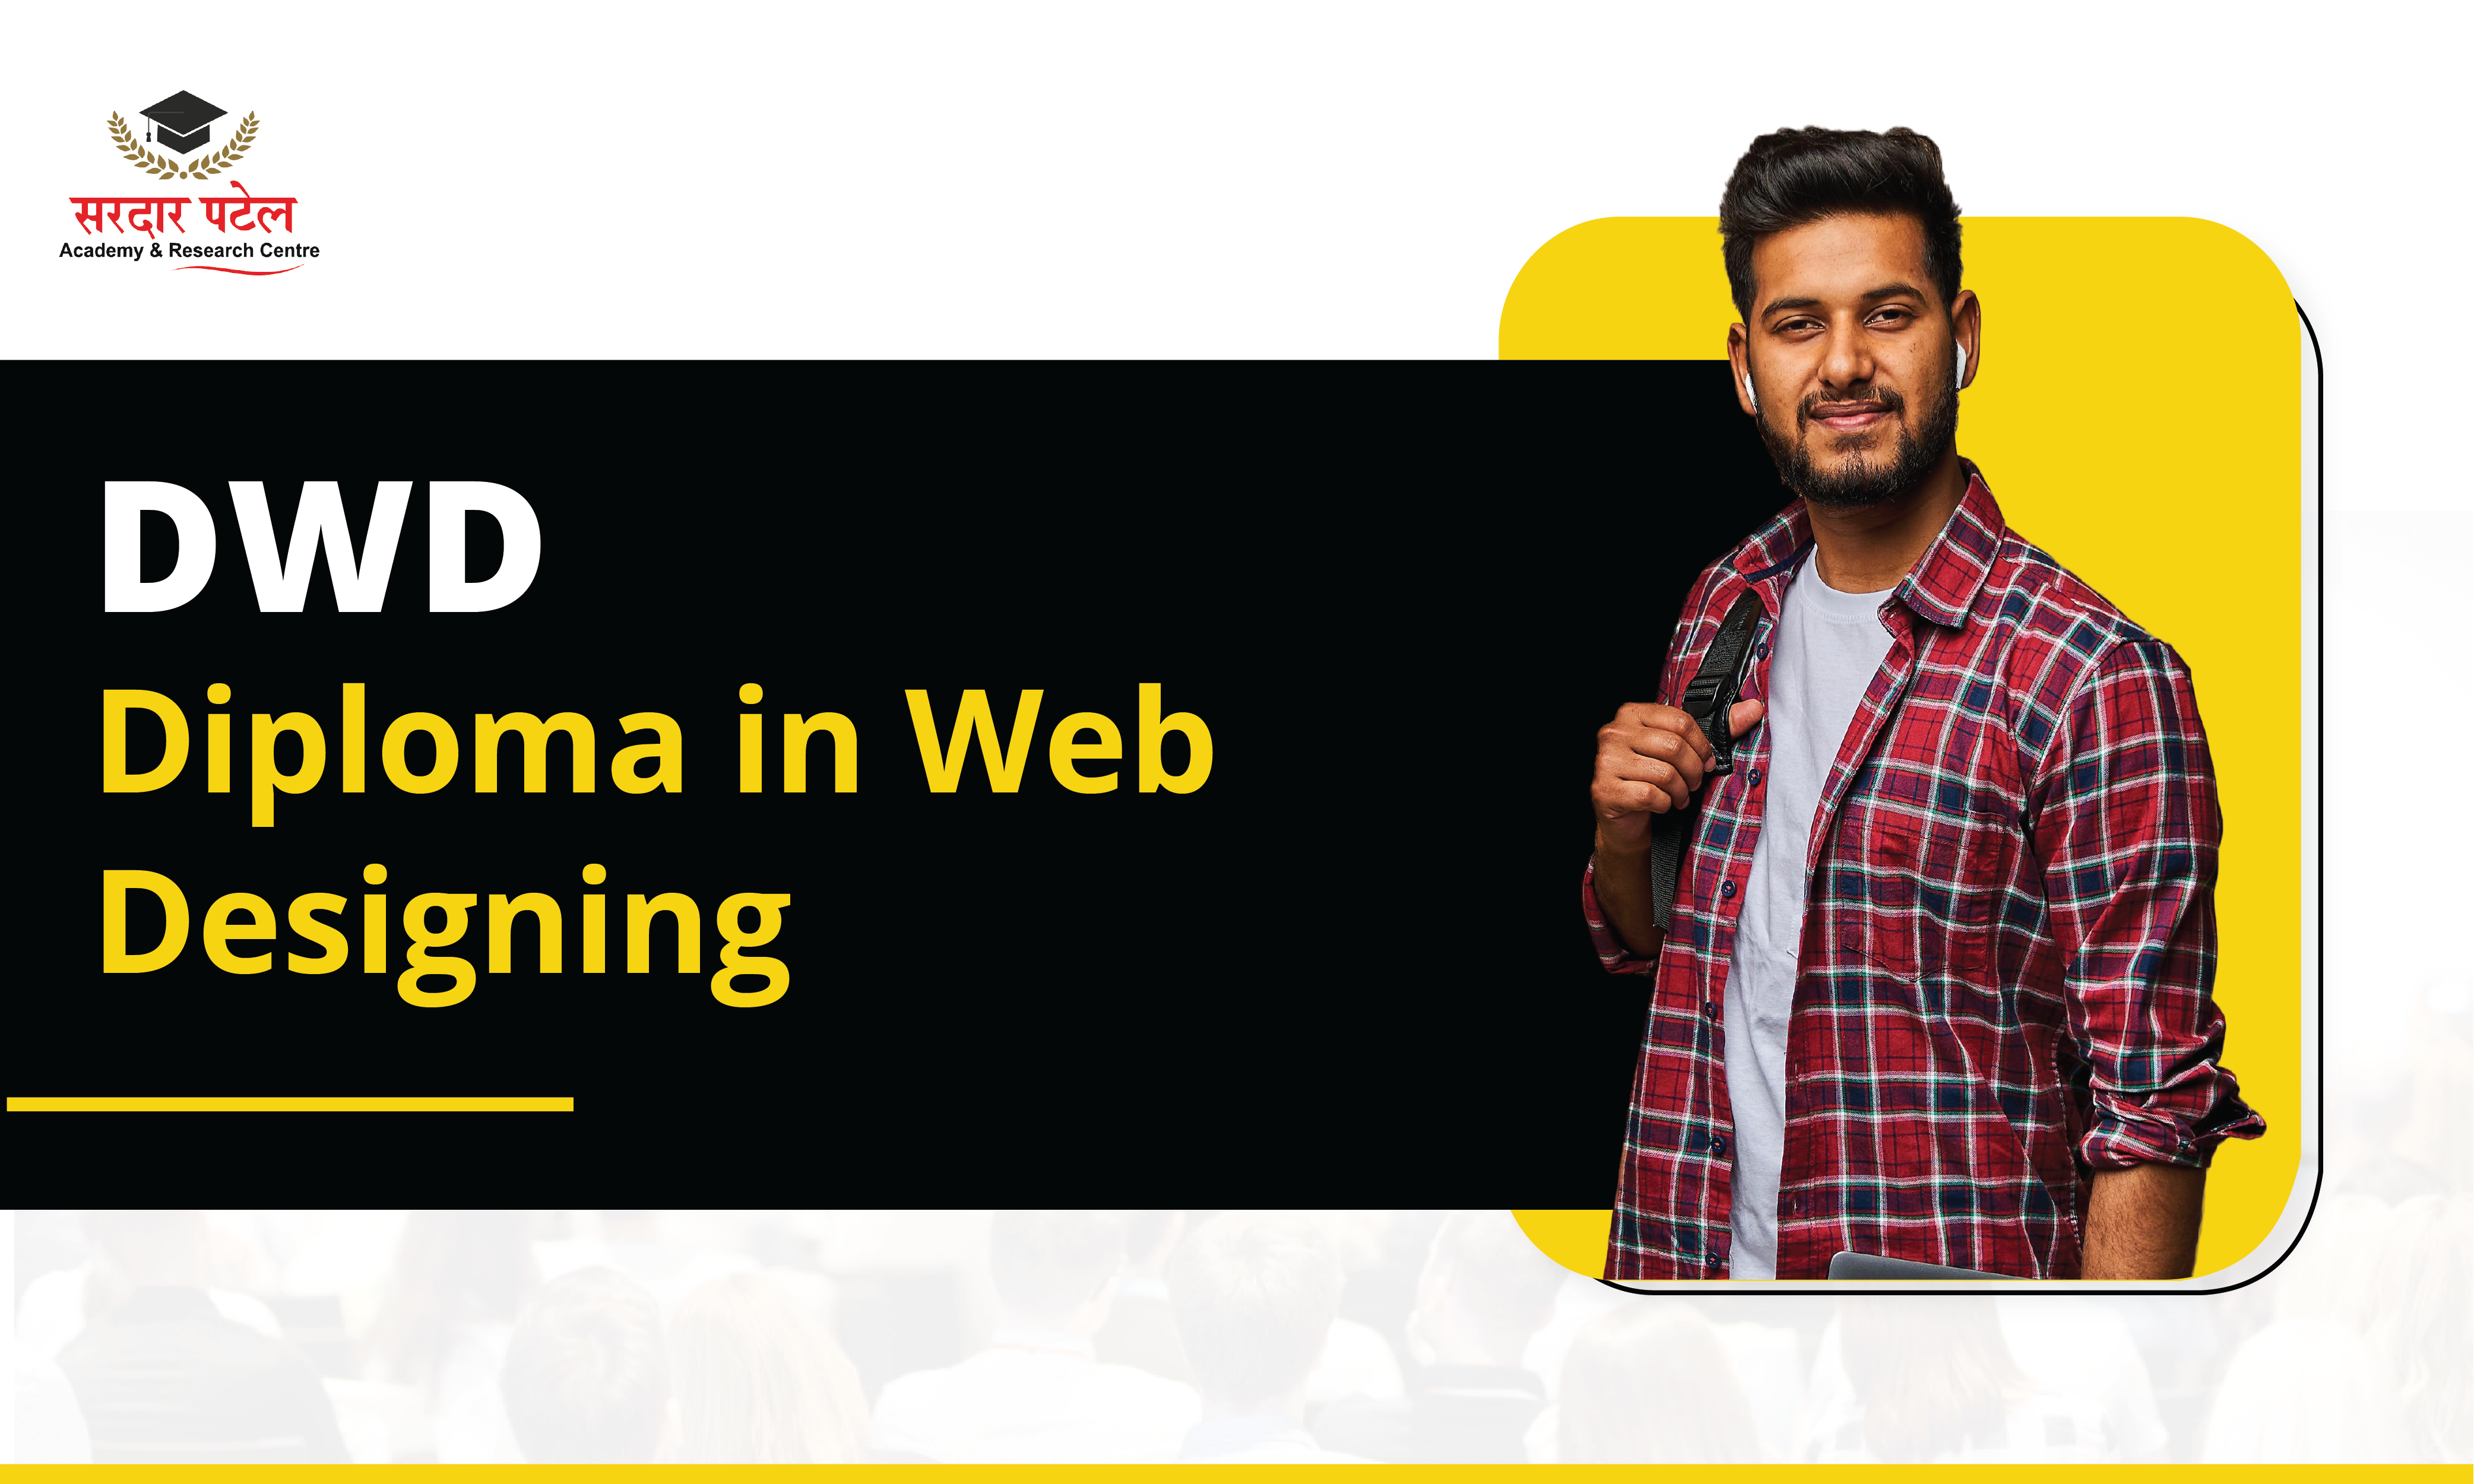 Diploma in Web Designing - DWD